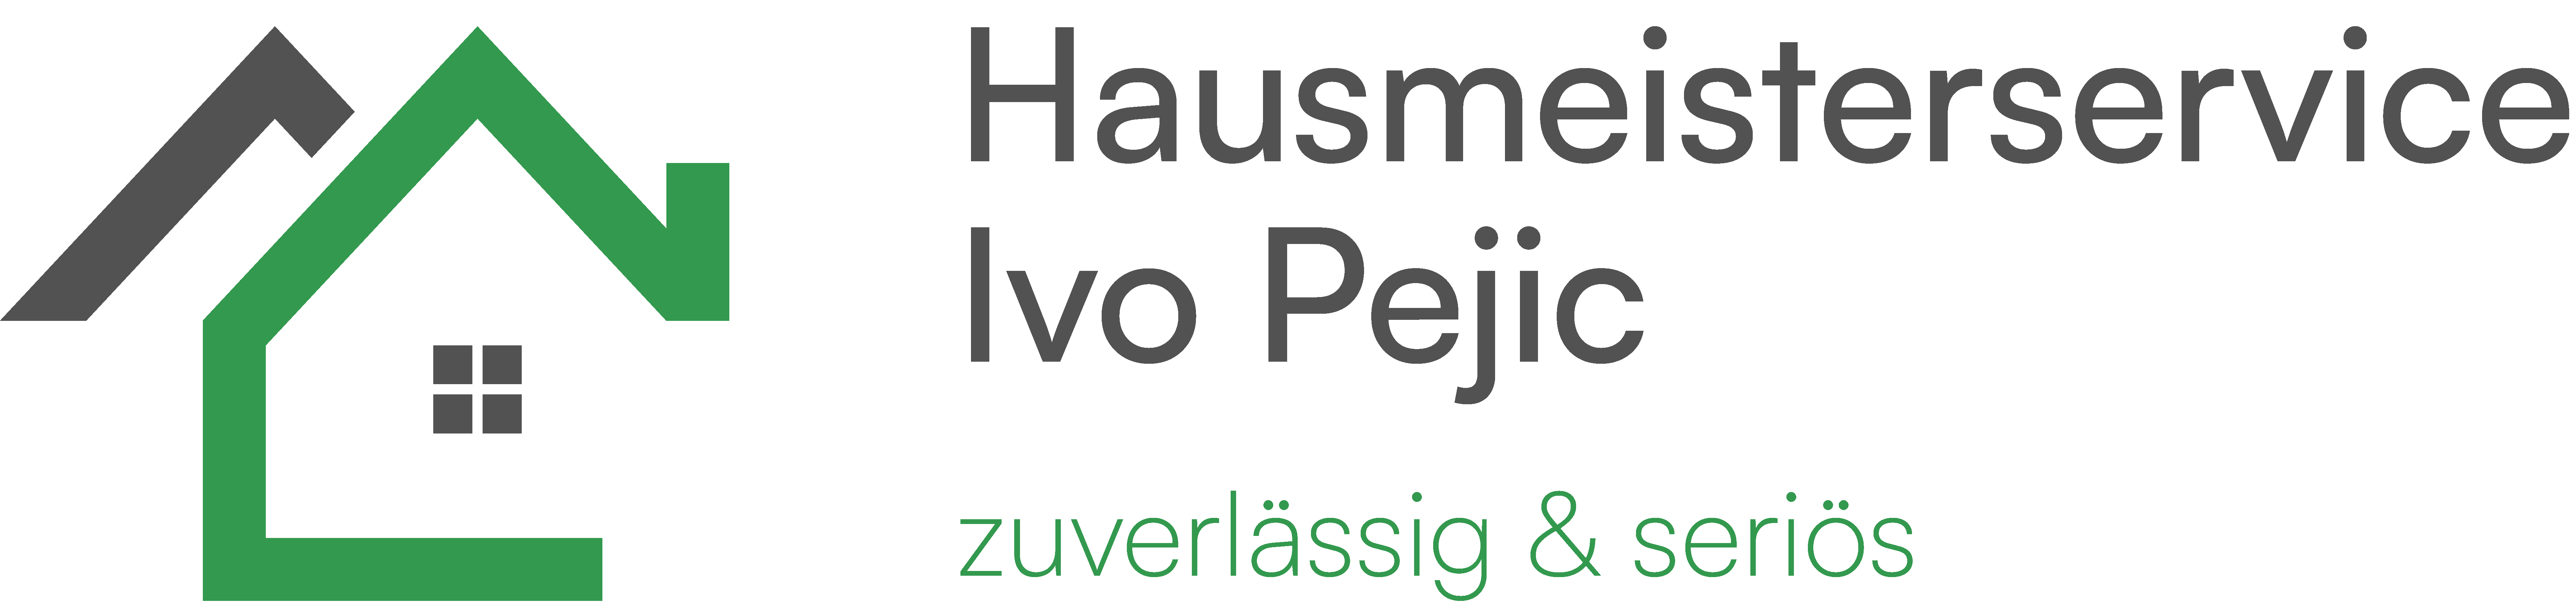 Hausmeisterservice Ivo Pejic